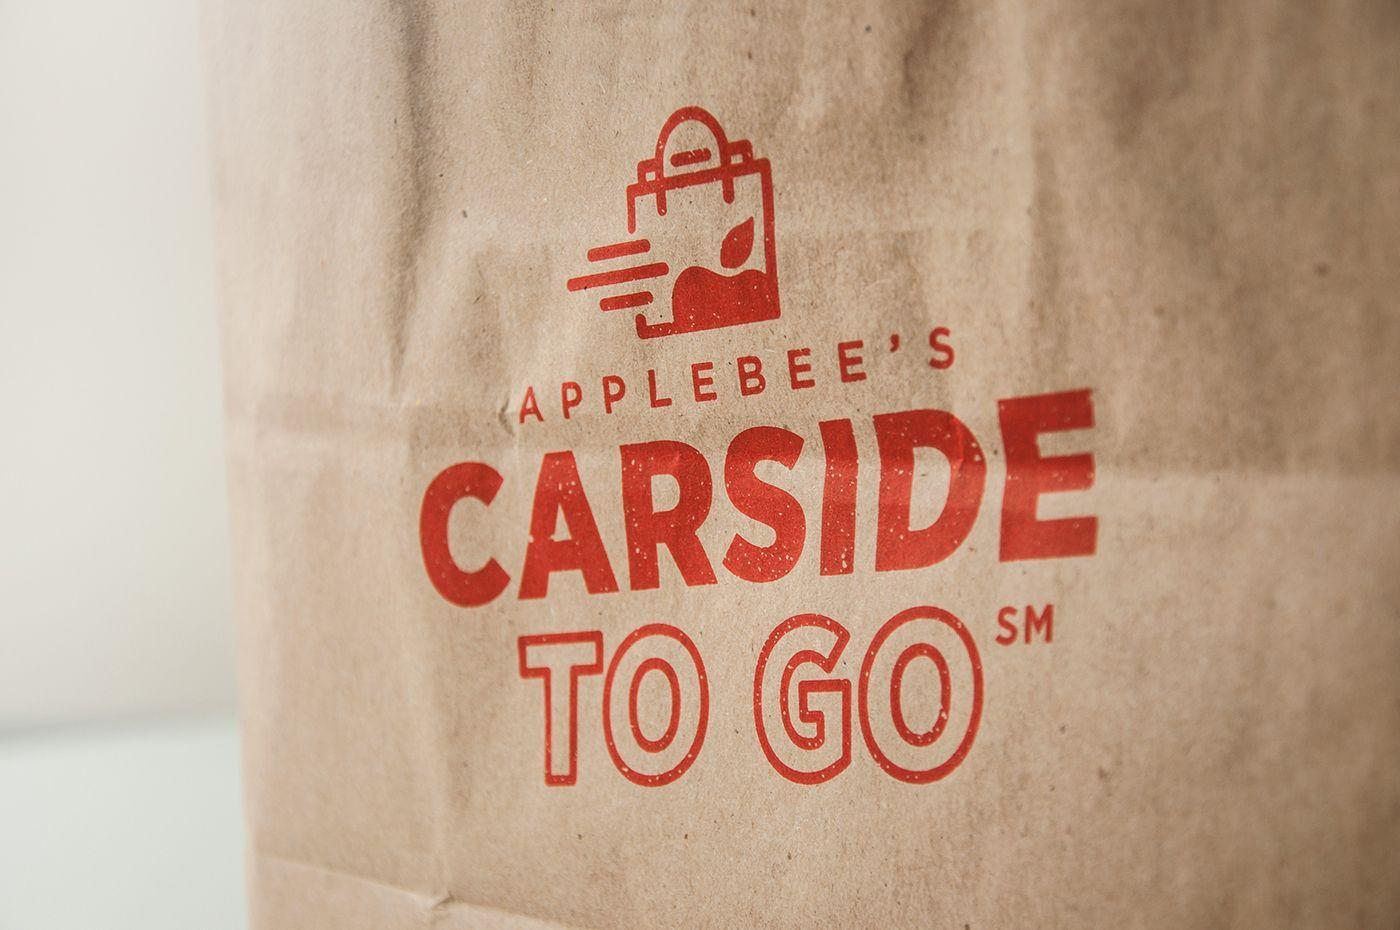 Applebee's Carside Logo - Applebee's Carside-To-Go | Logos / Indentities | Pinterest | Logos ...